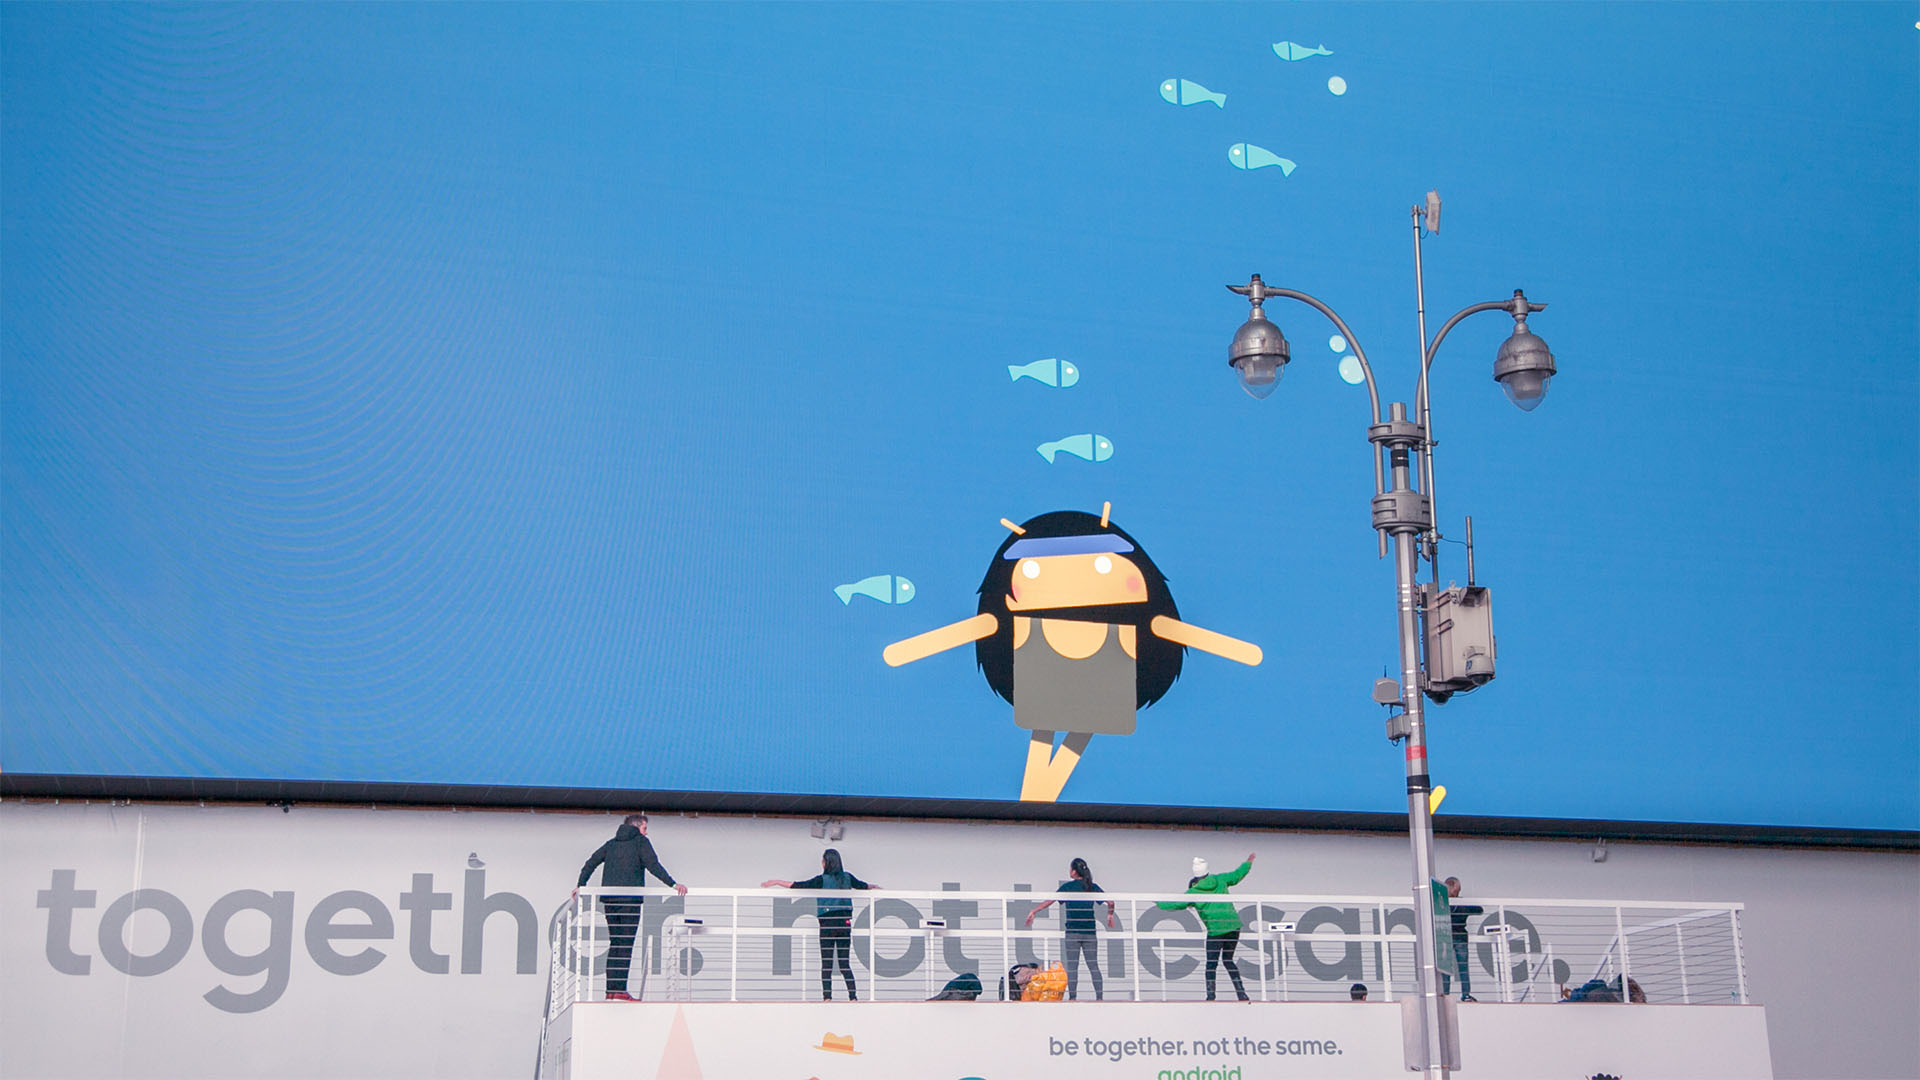 Google Androidify Kinect Game: Swimming